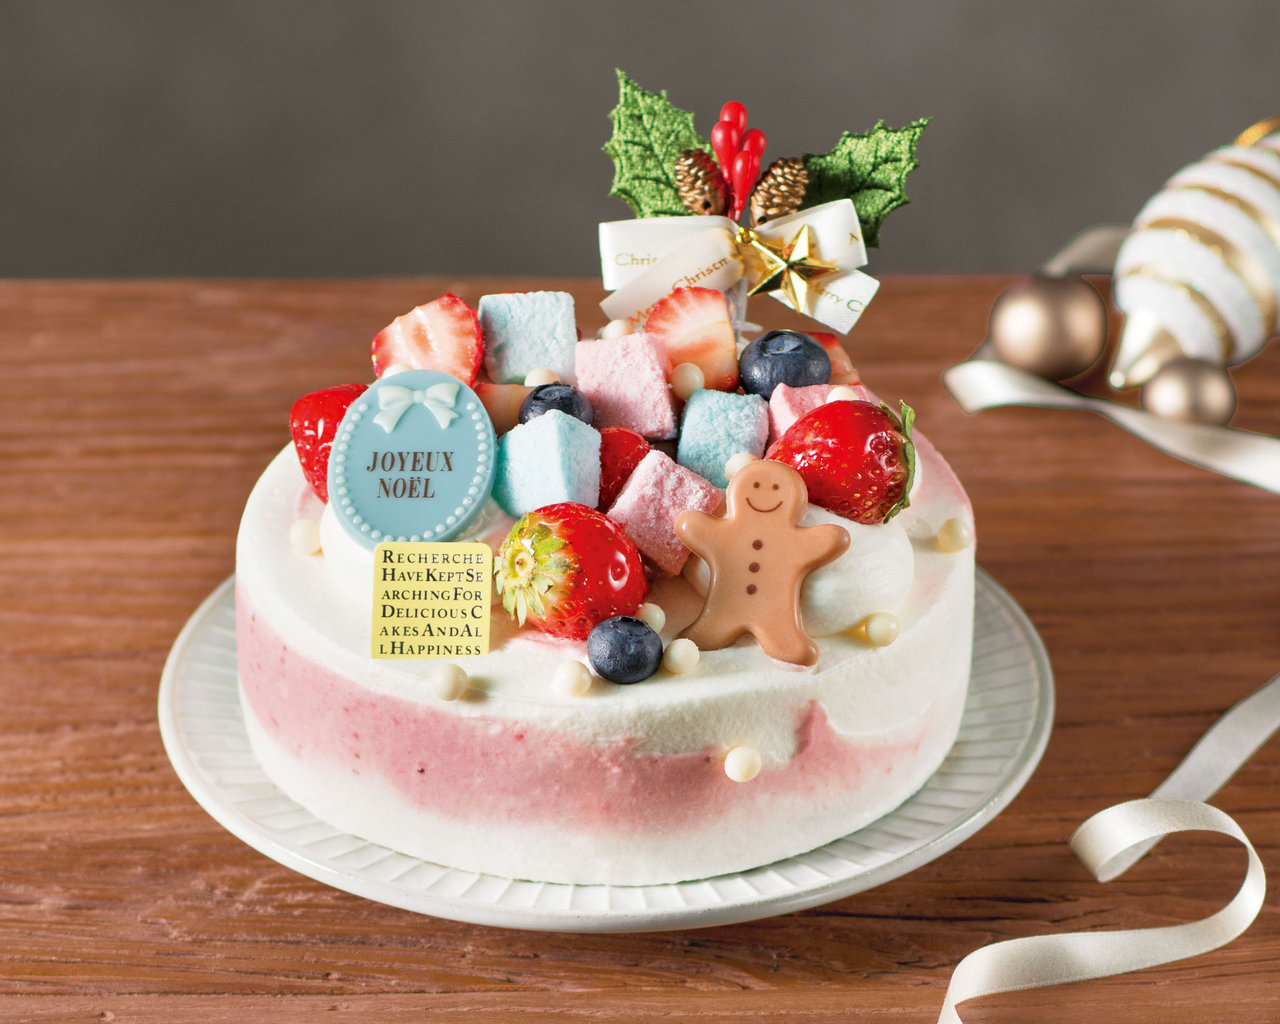 ｓｎｓ映え間違いなし フォトジェニックな今年のクリスマスケーキたち 奈良からはルシェルシュのケーキが登場 大丸心斎橋店 奈良 の地元情報を毎日更新 ならぷら